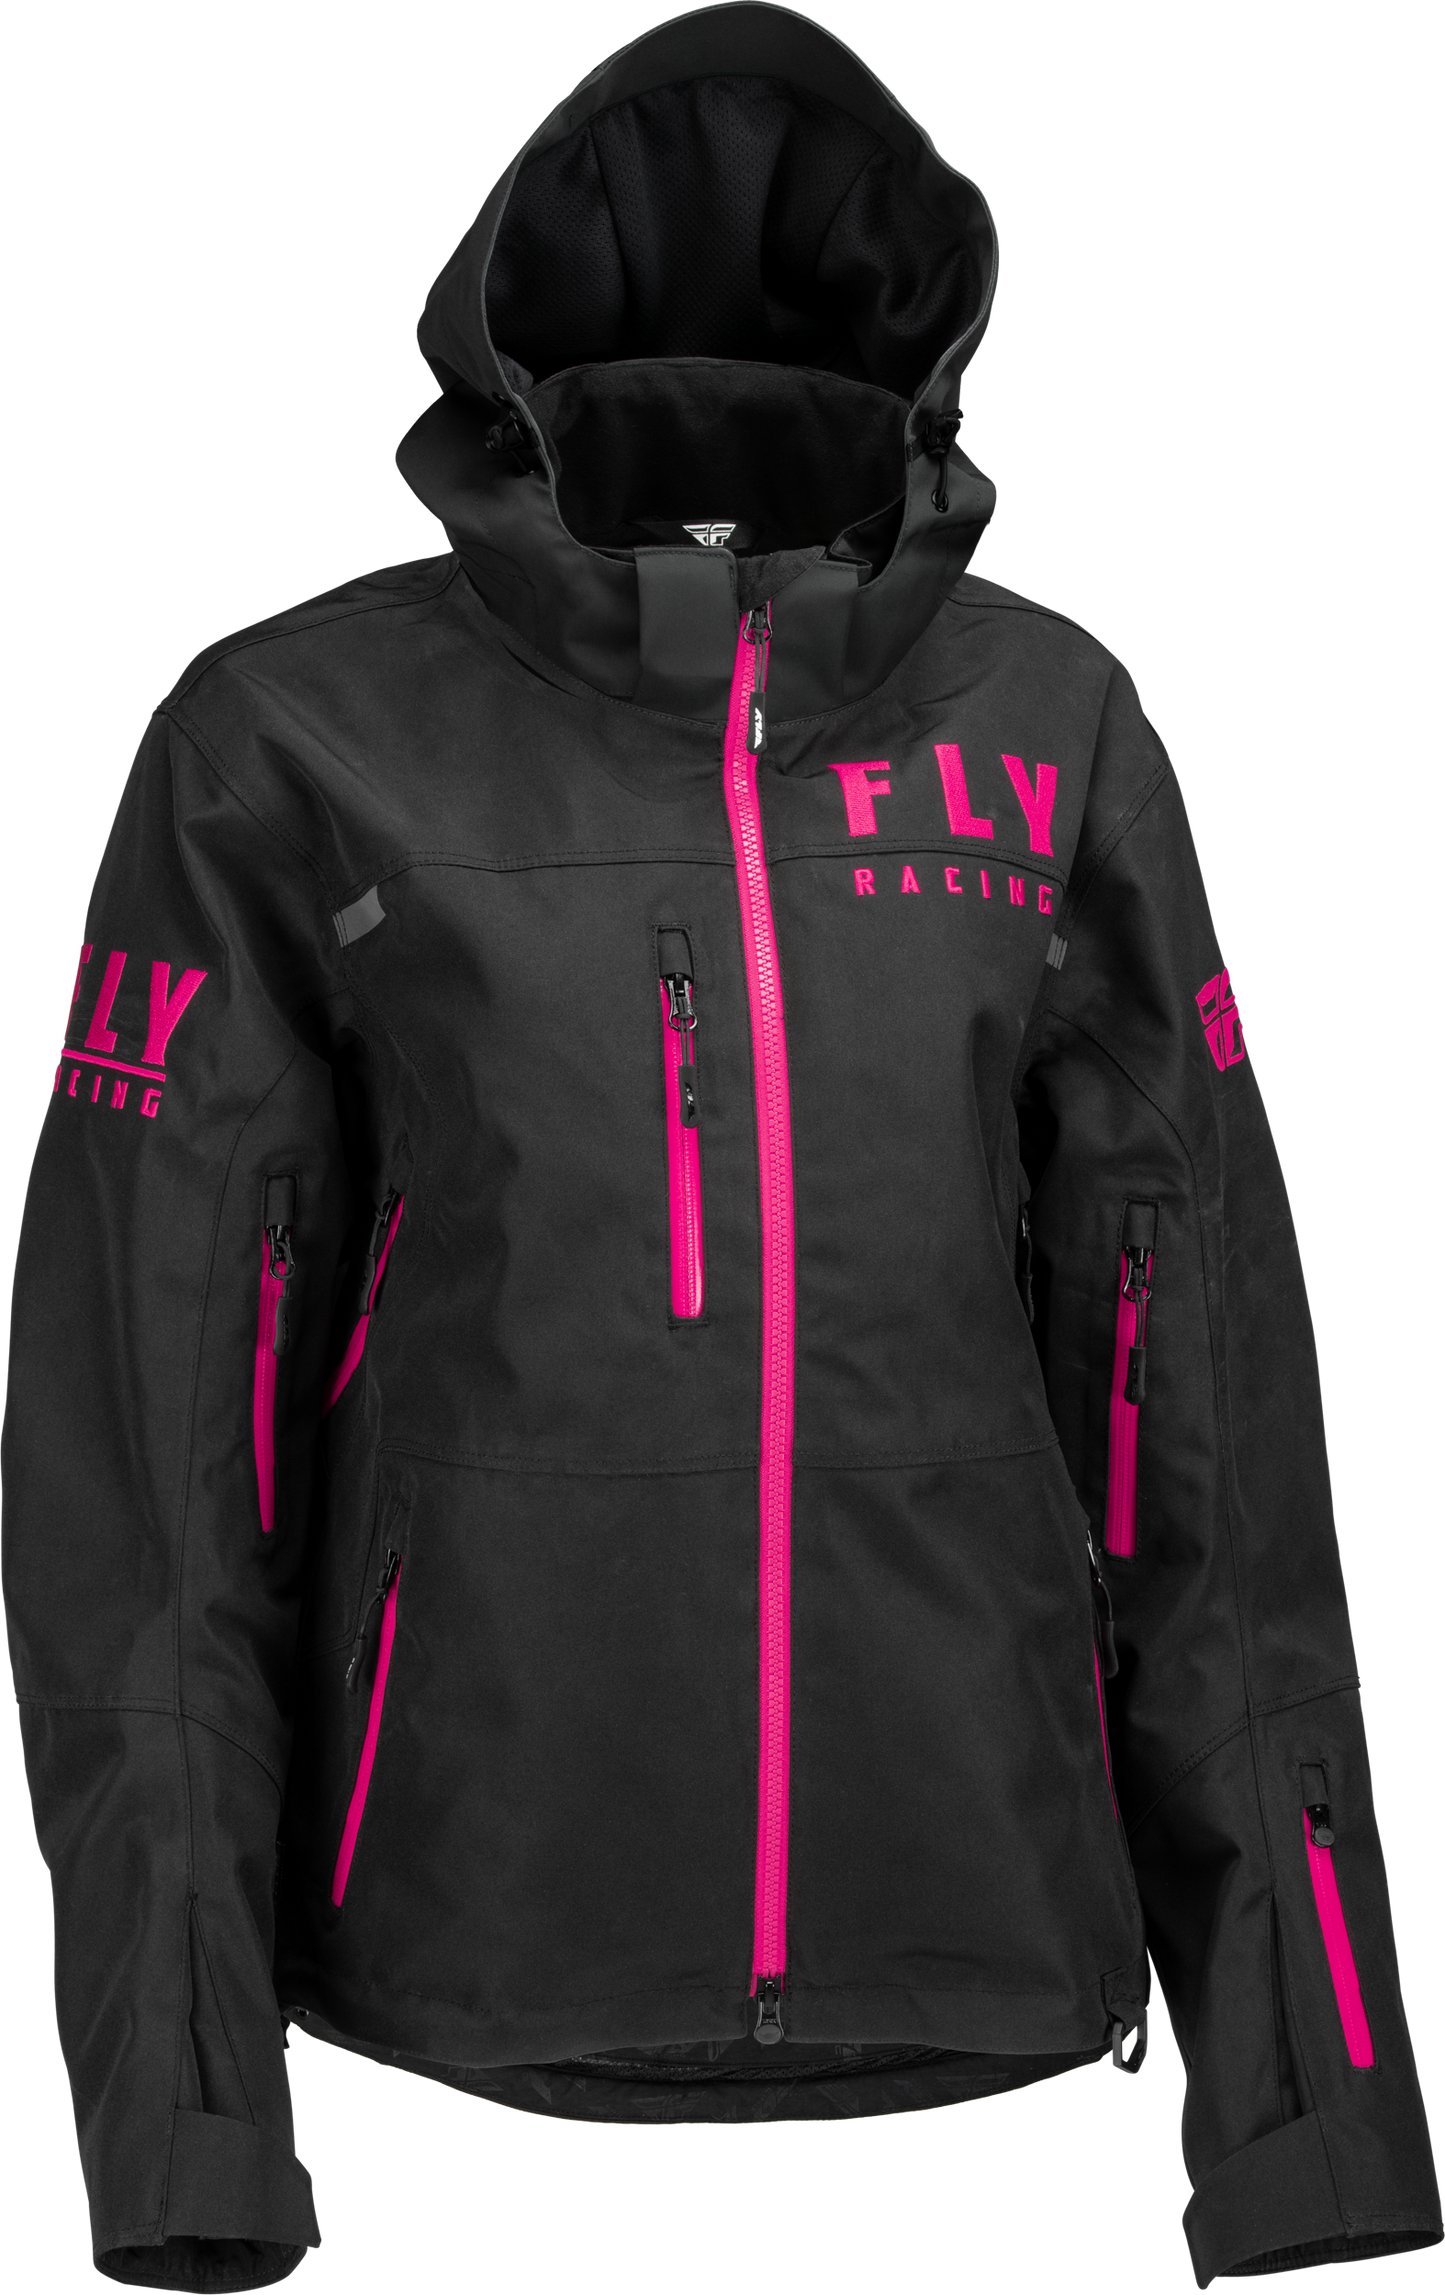 FLY RACING Women's Carbon Jacket Black/Pink 4x 470-45024X